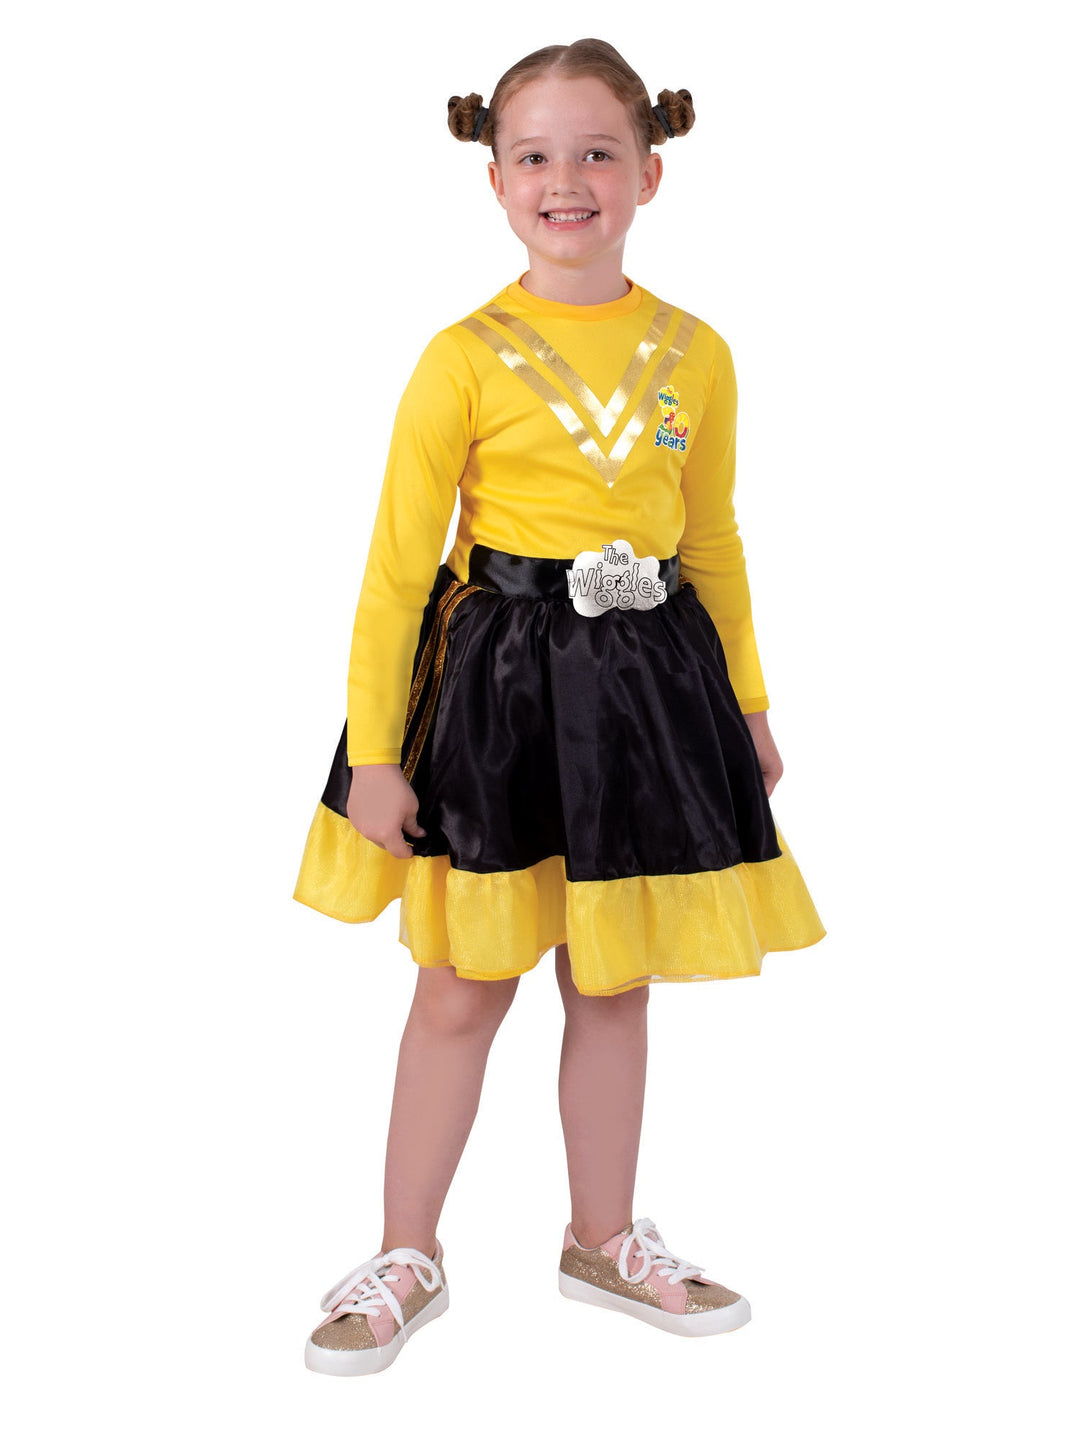 Emma Wiggle Costume Kids 30th Anniversary_1